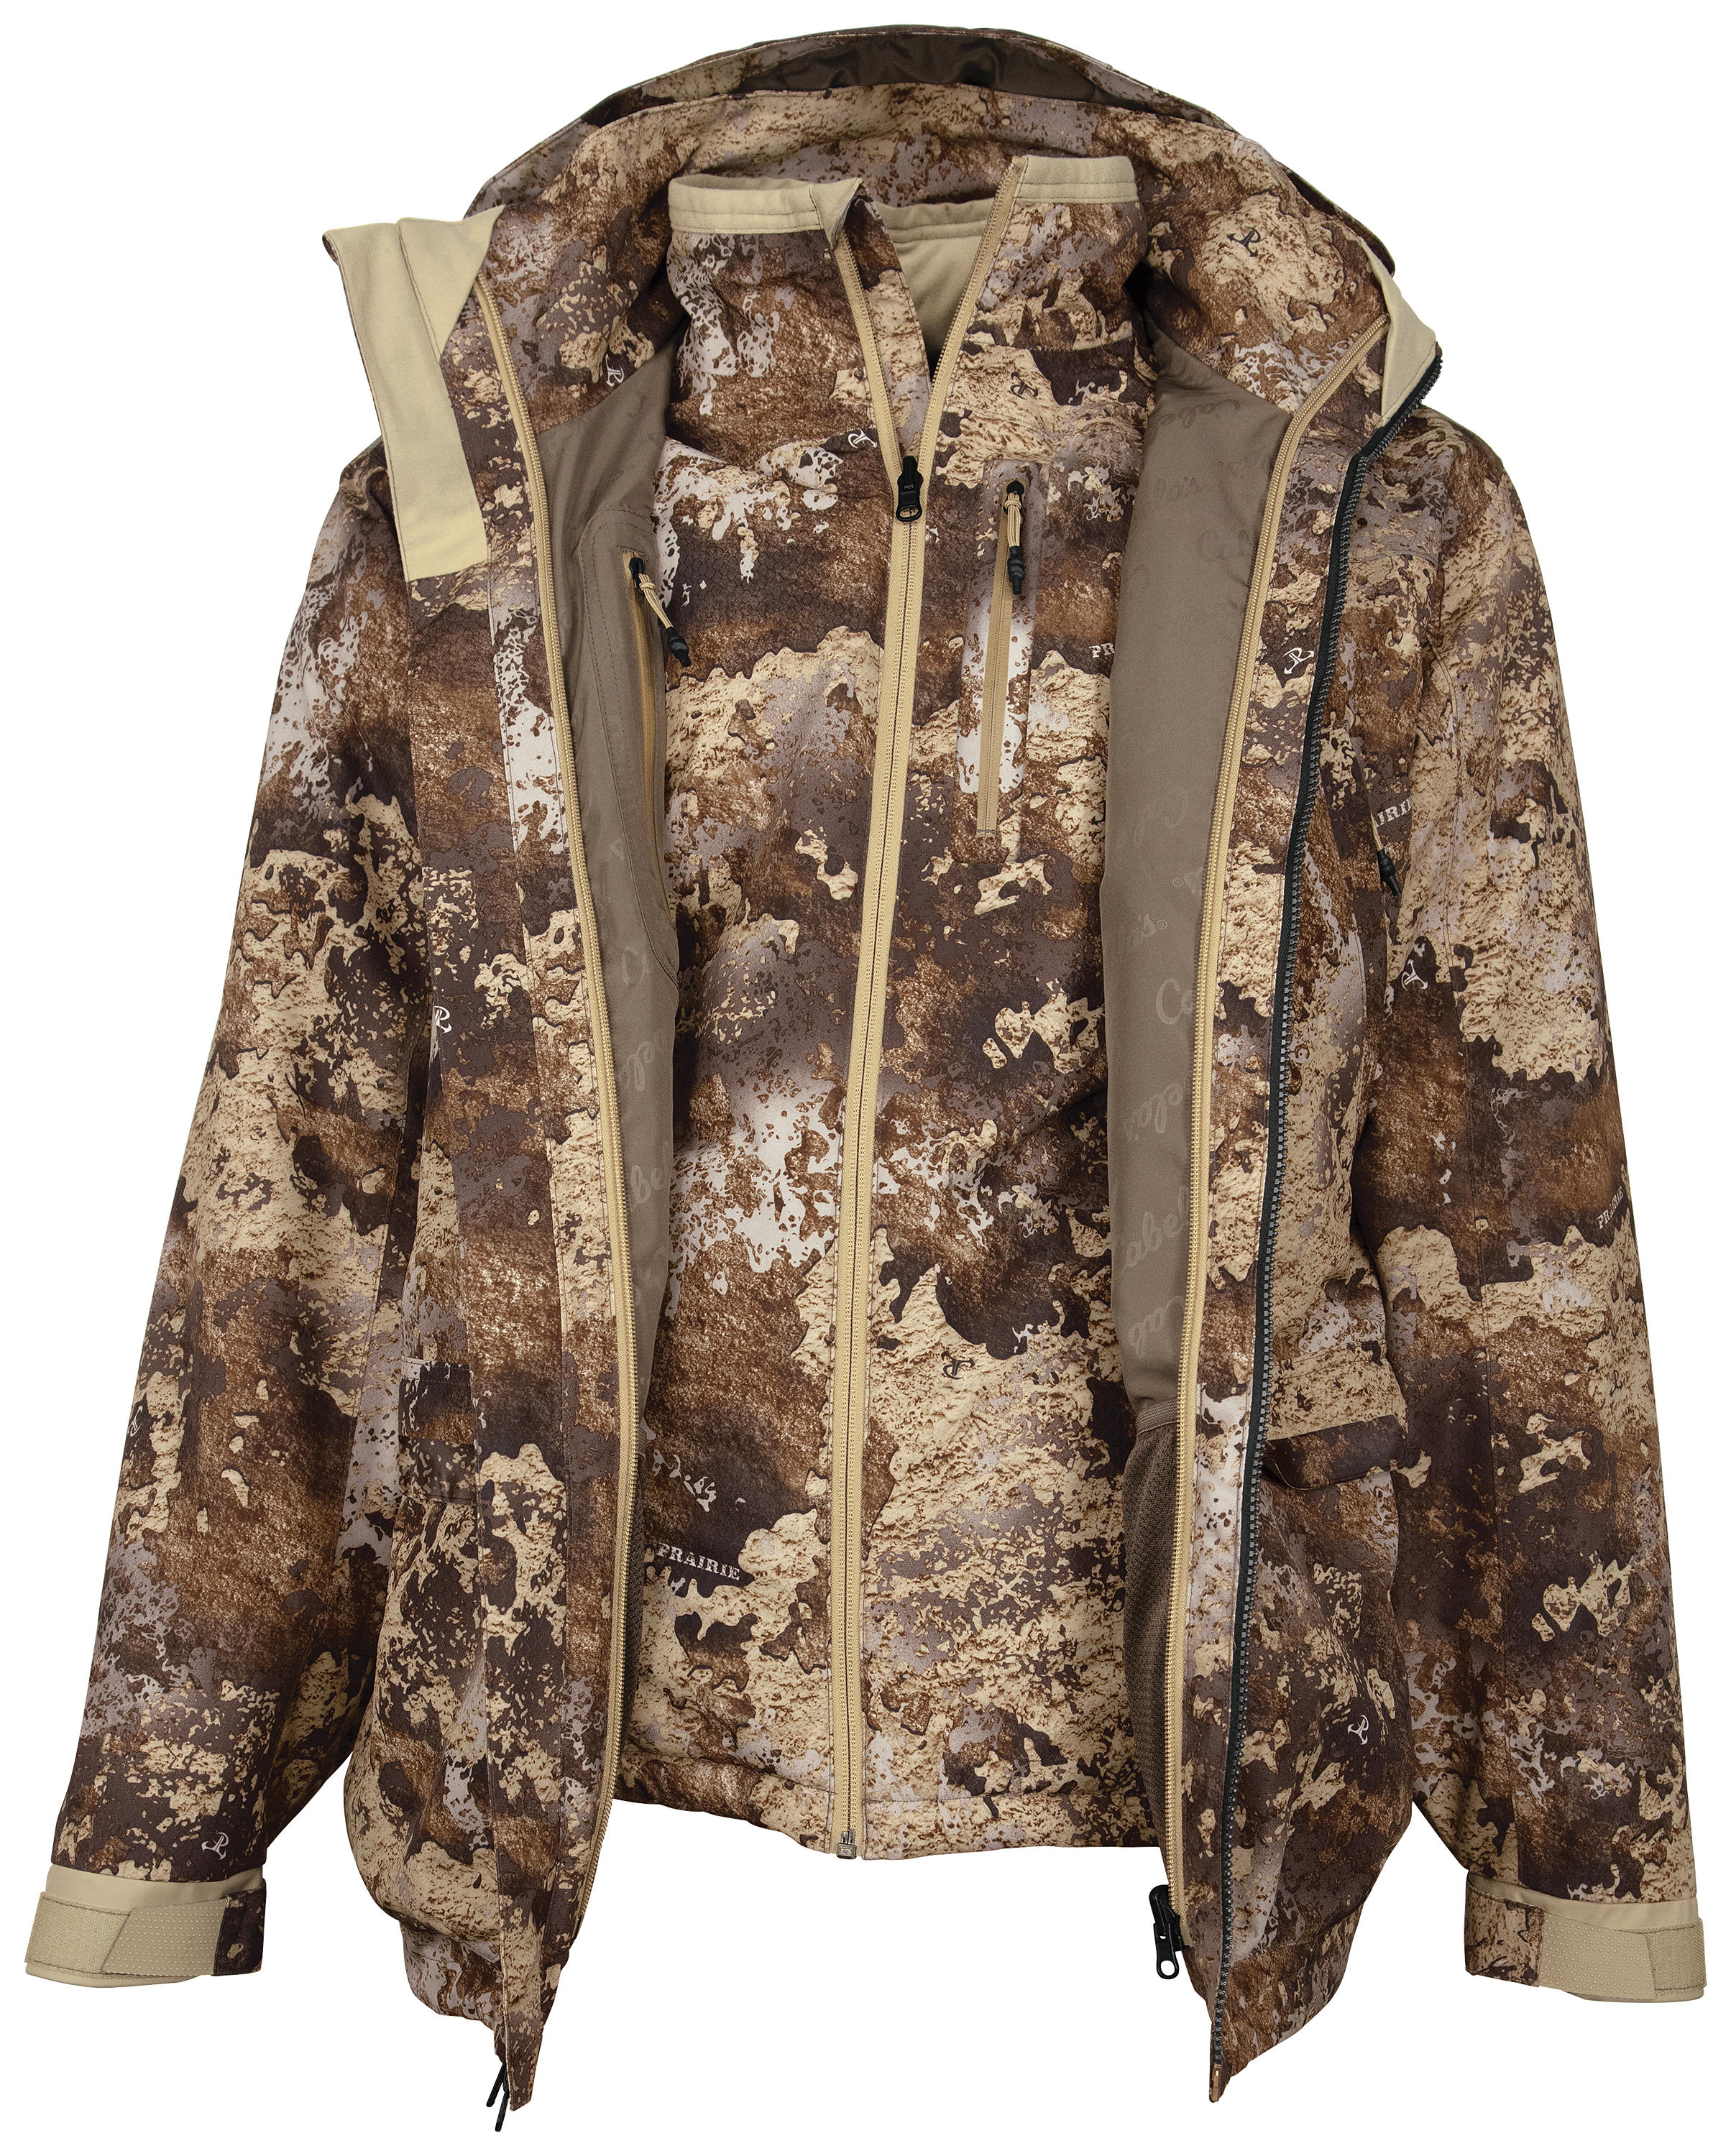 Cabela's Puffy Camo Insulated Jacket for Men - TrueTimber Strata - XL